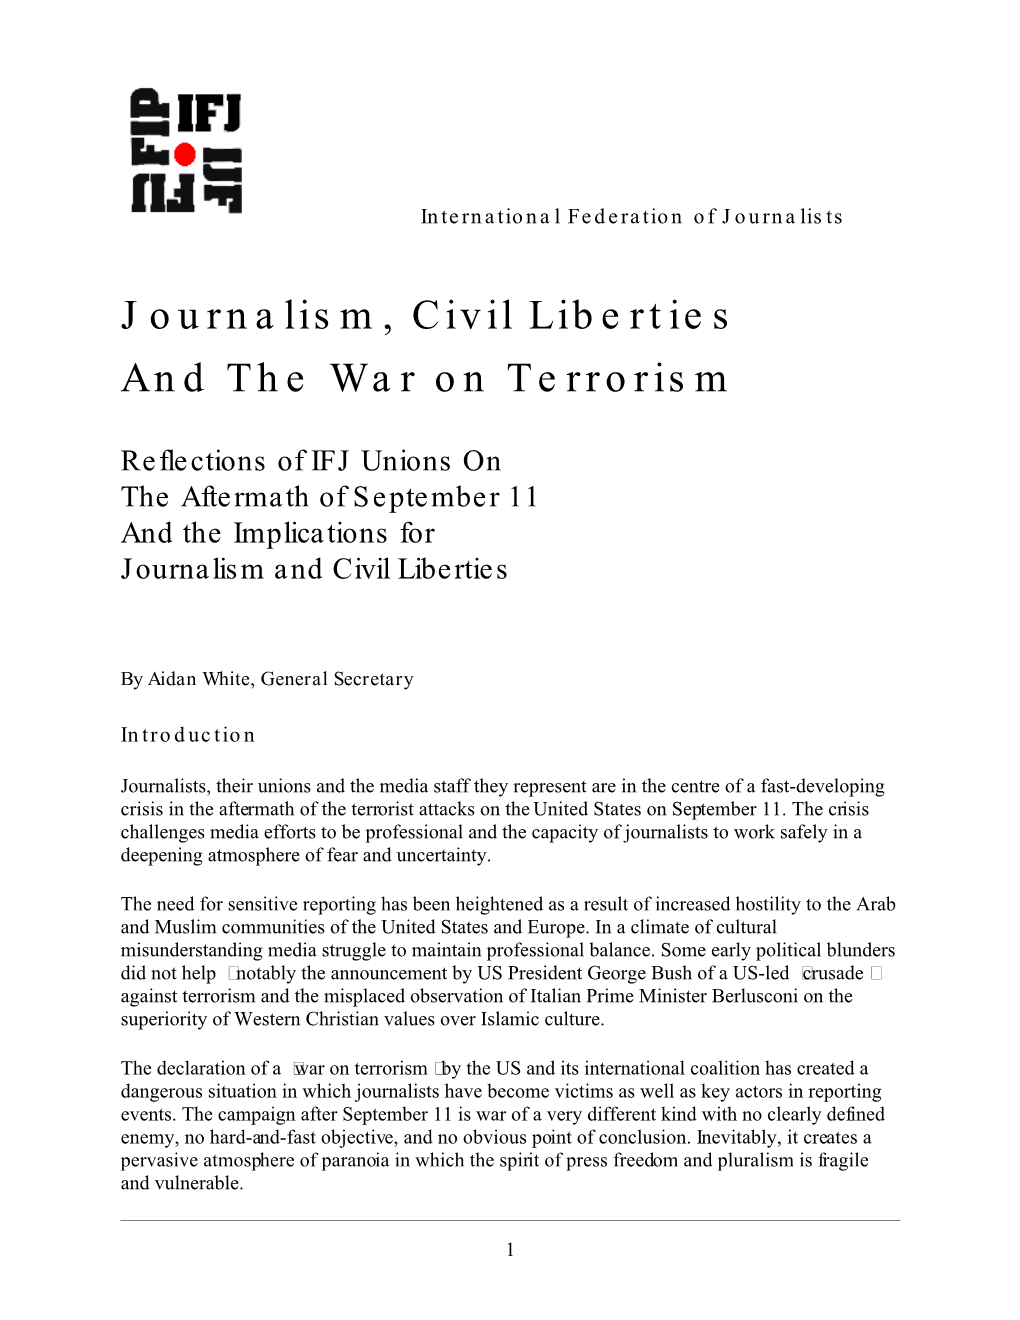 Journalism, Civil Liberties and the War on Terrorism